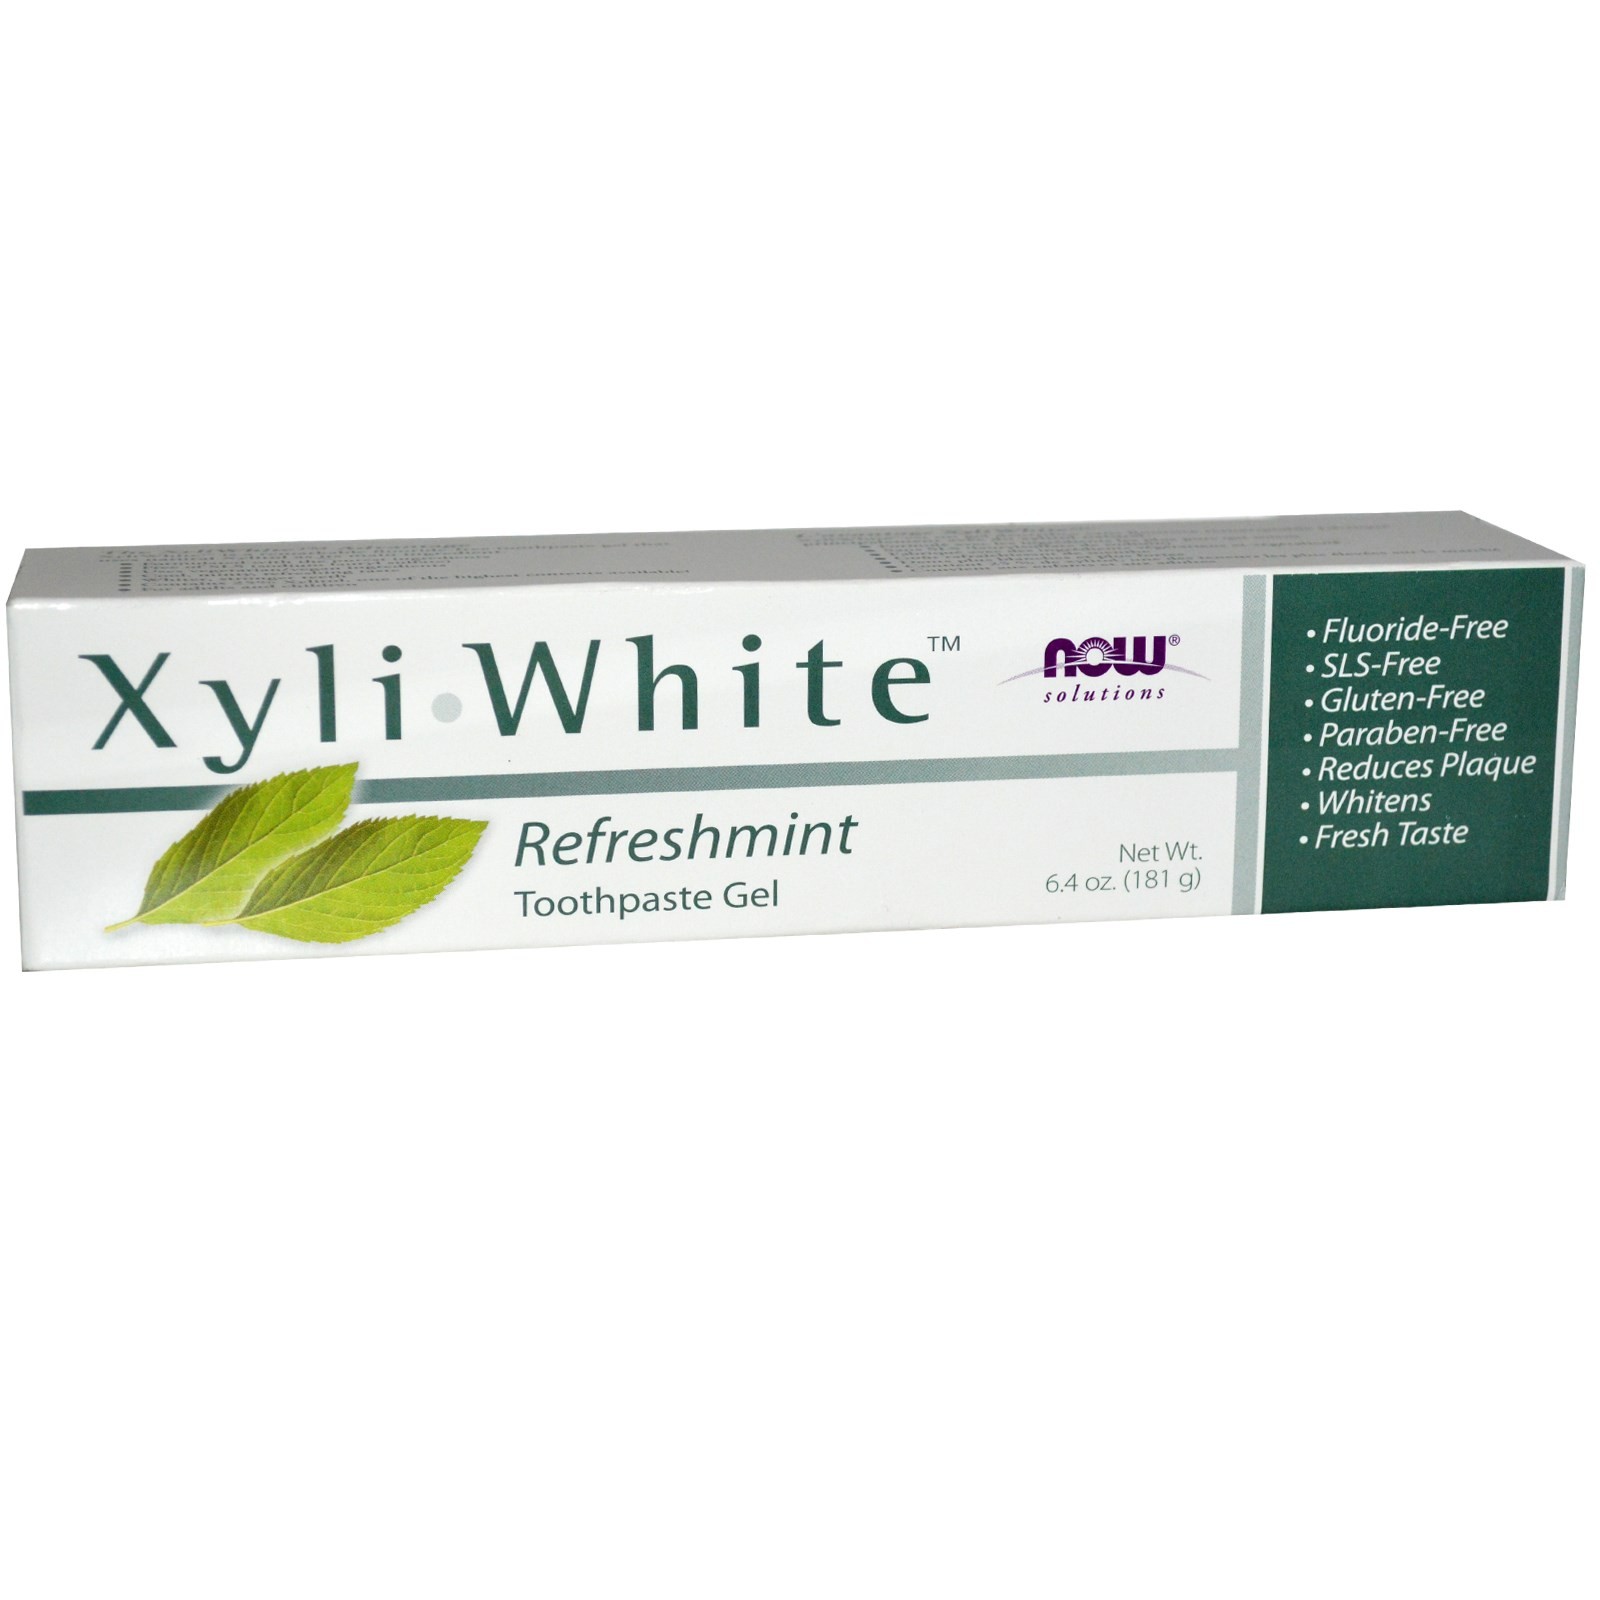 NOW Зубная гель-паста XyliWhite Toothpaste Gel Refreshmint, 181 г